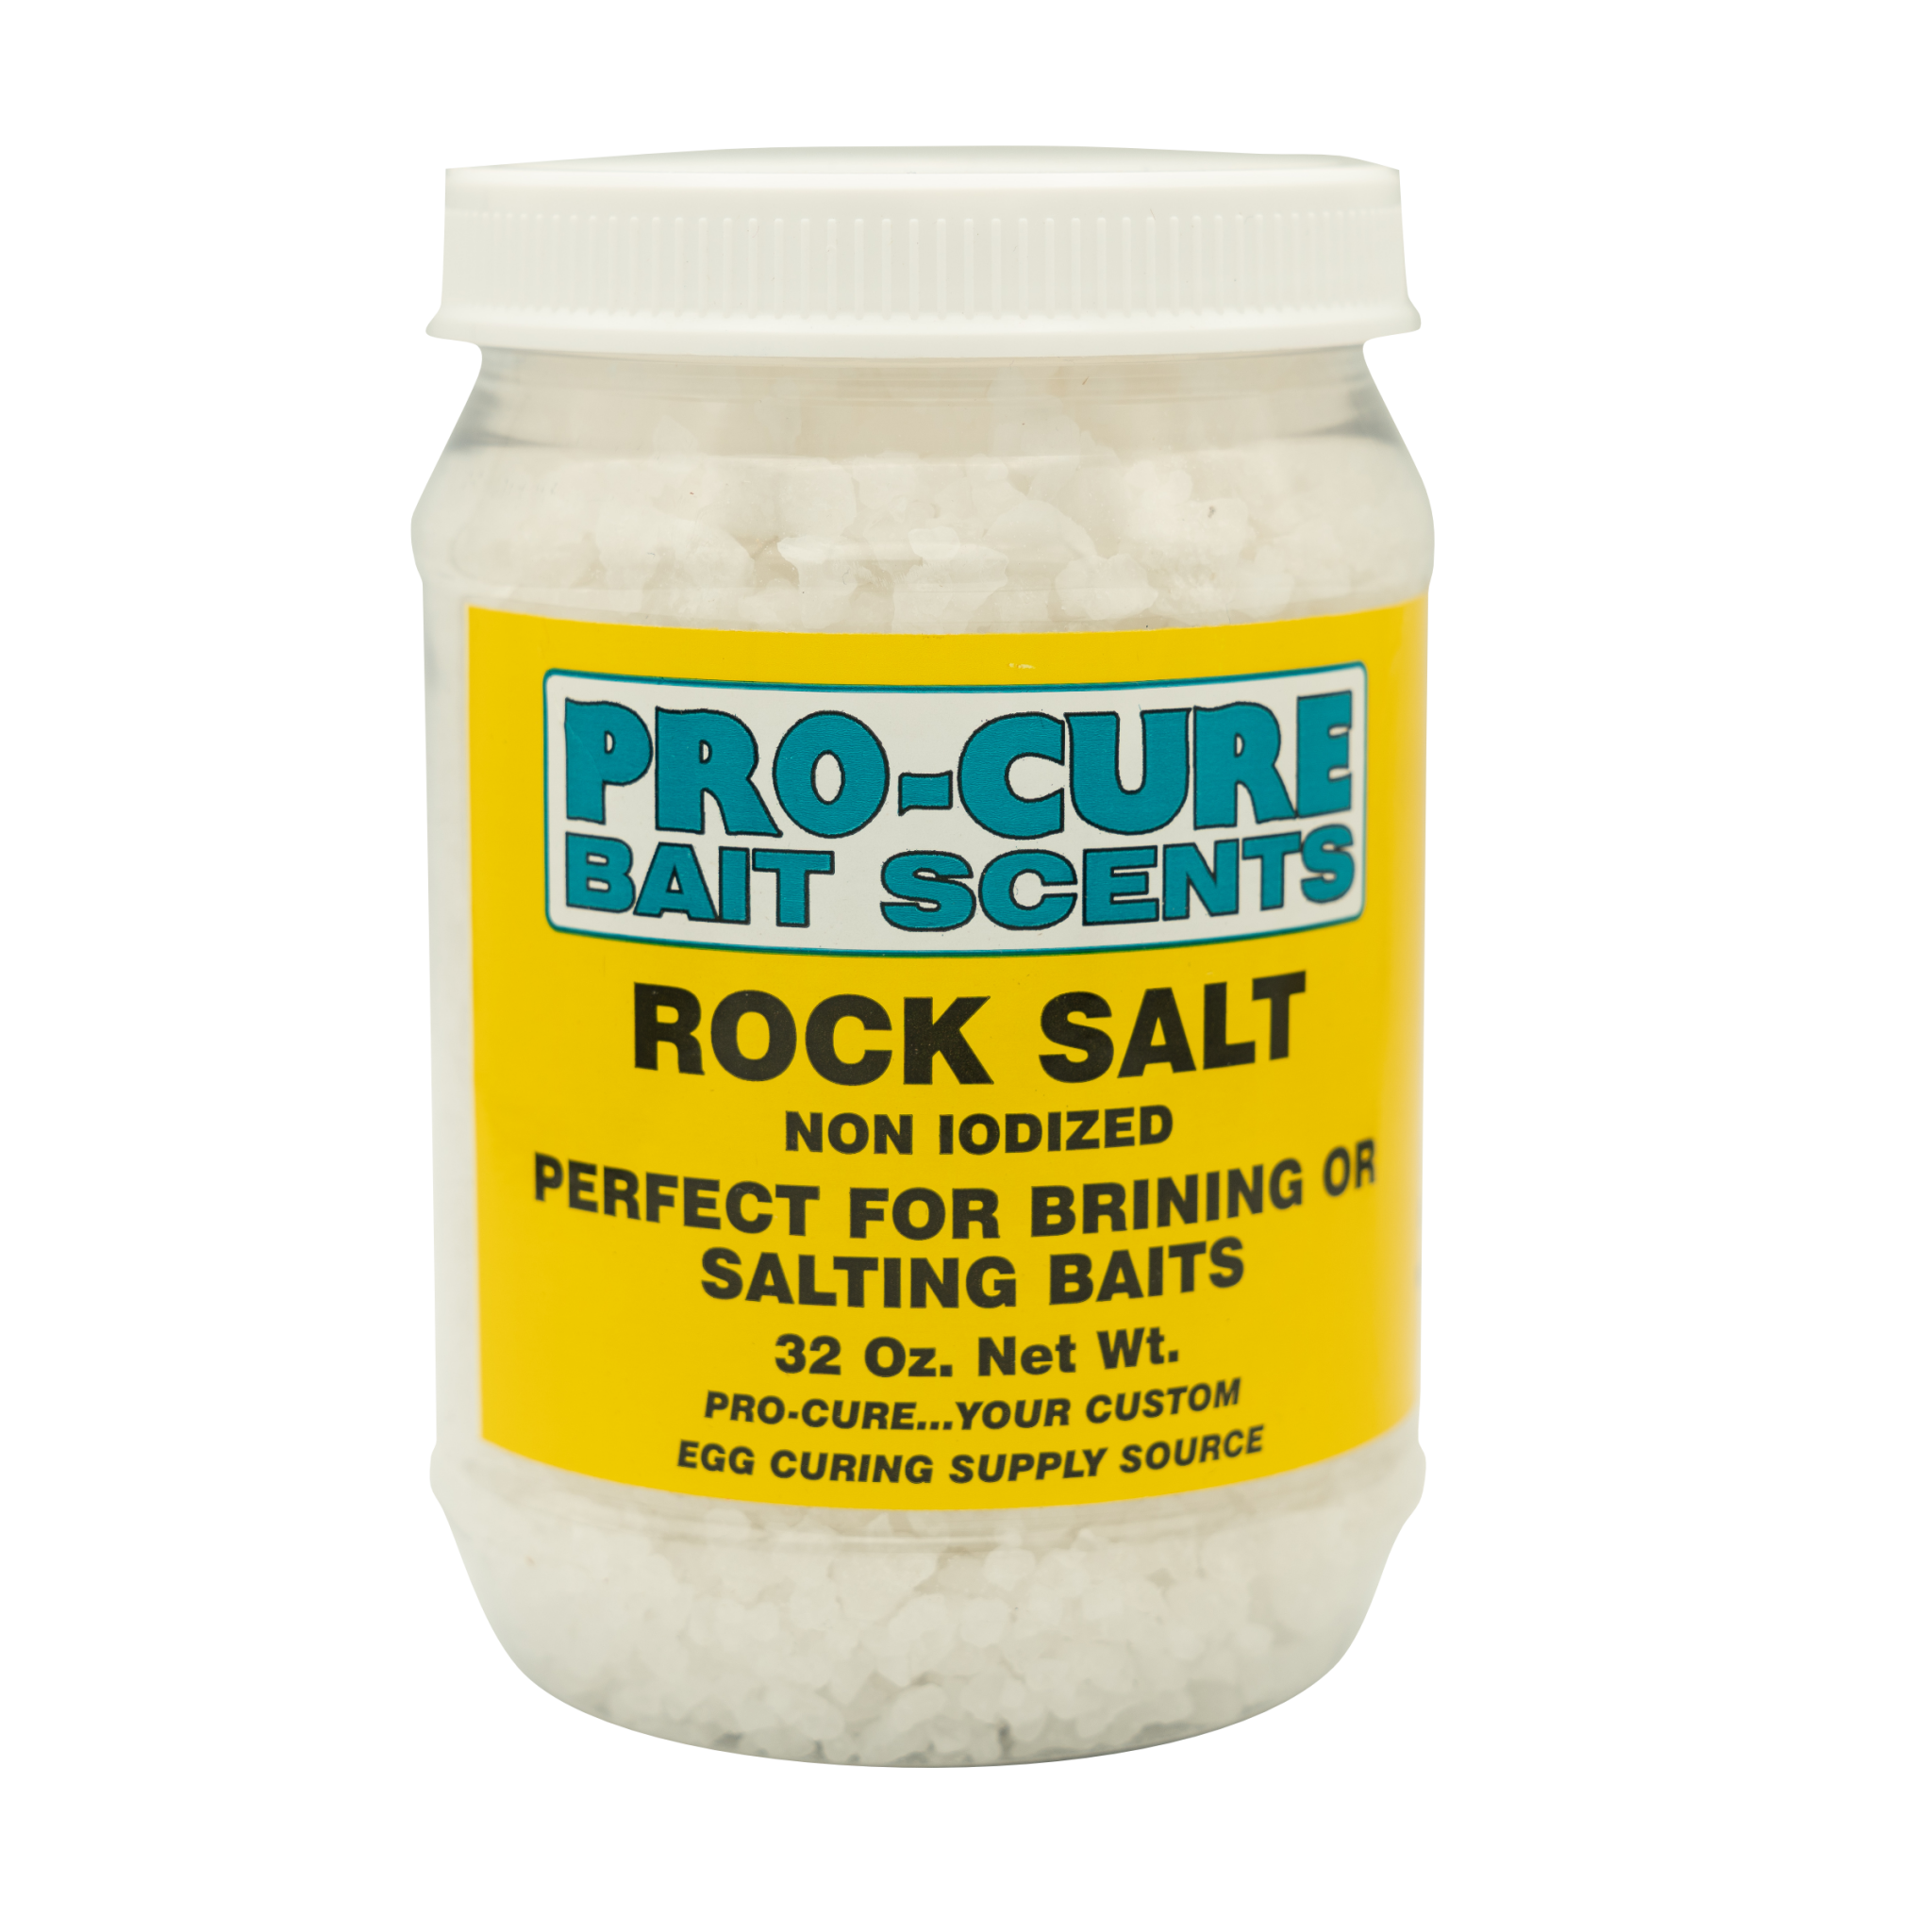 ROCK SALT – Pro-Cure, Inc